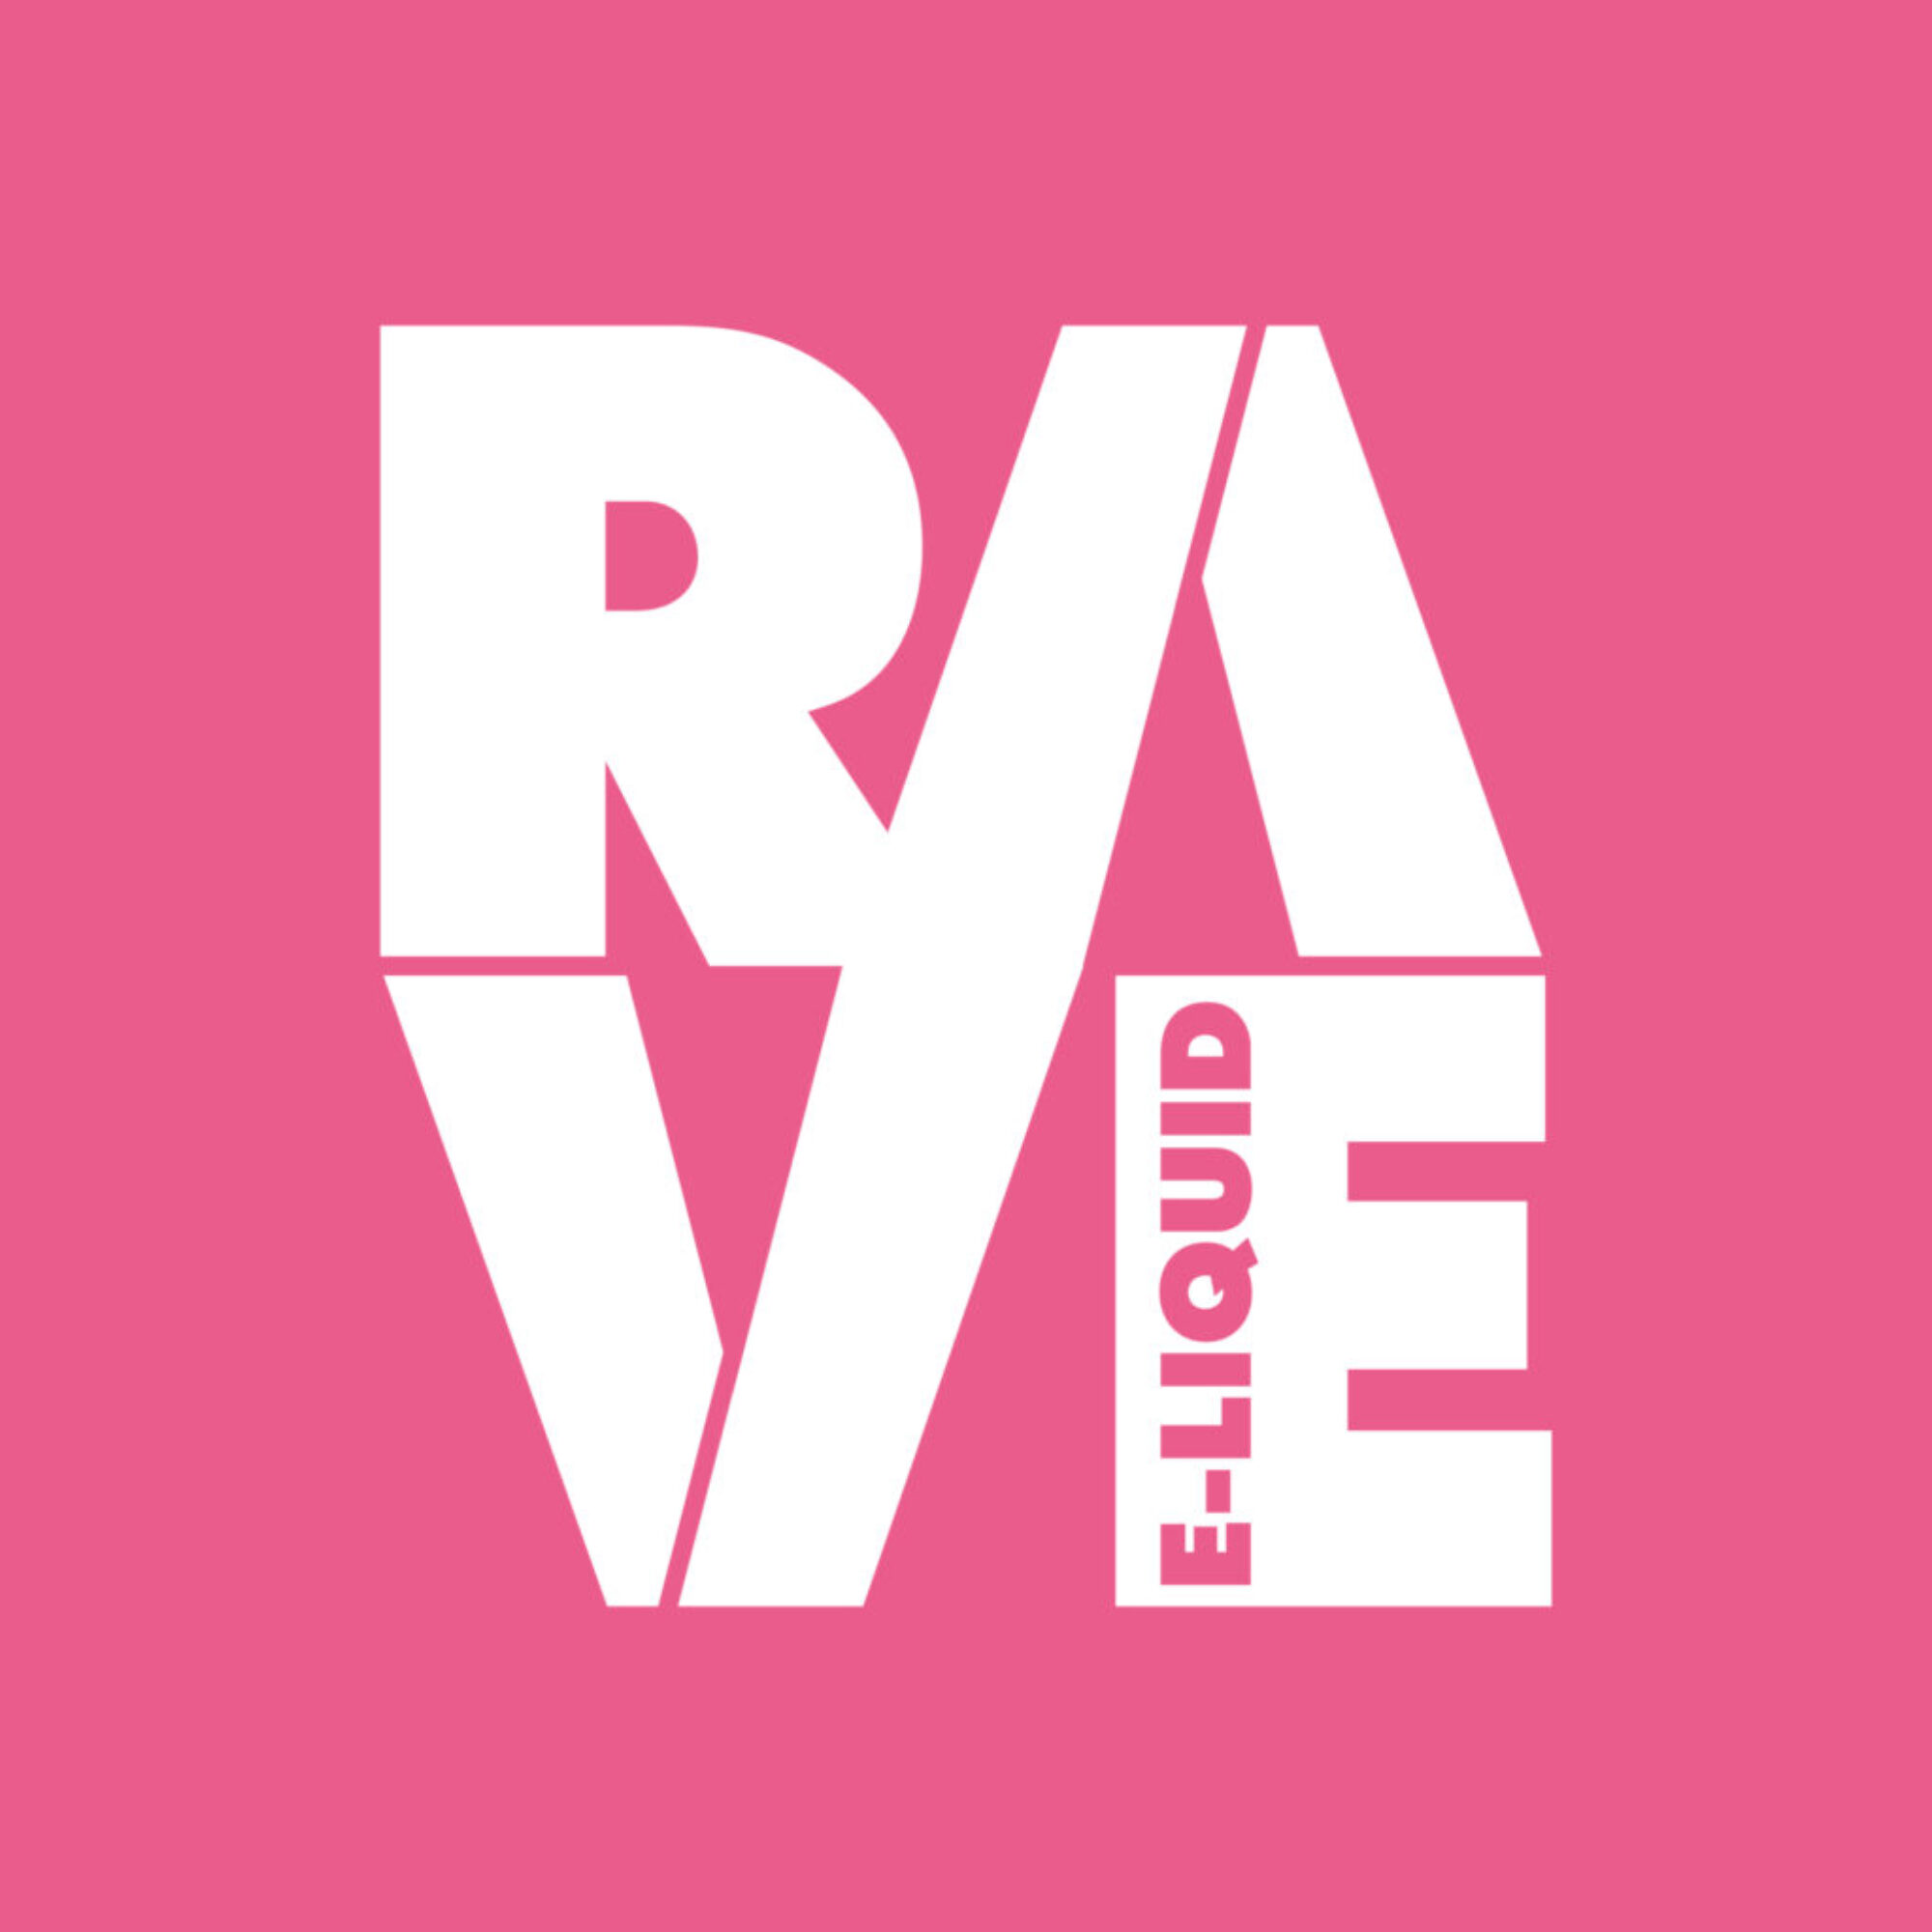 Rave_Pink background